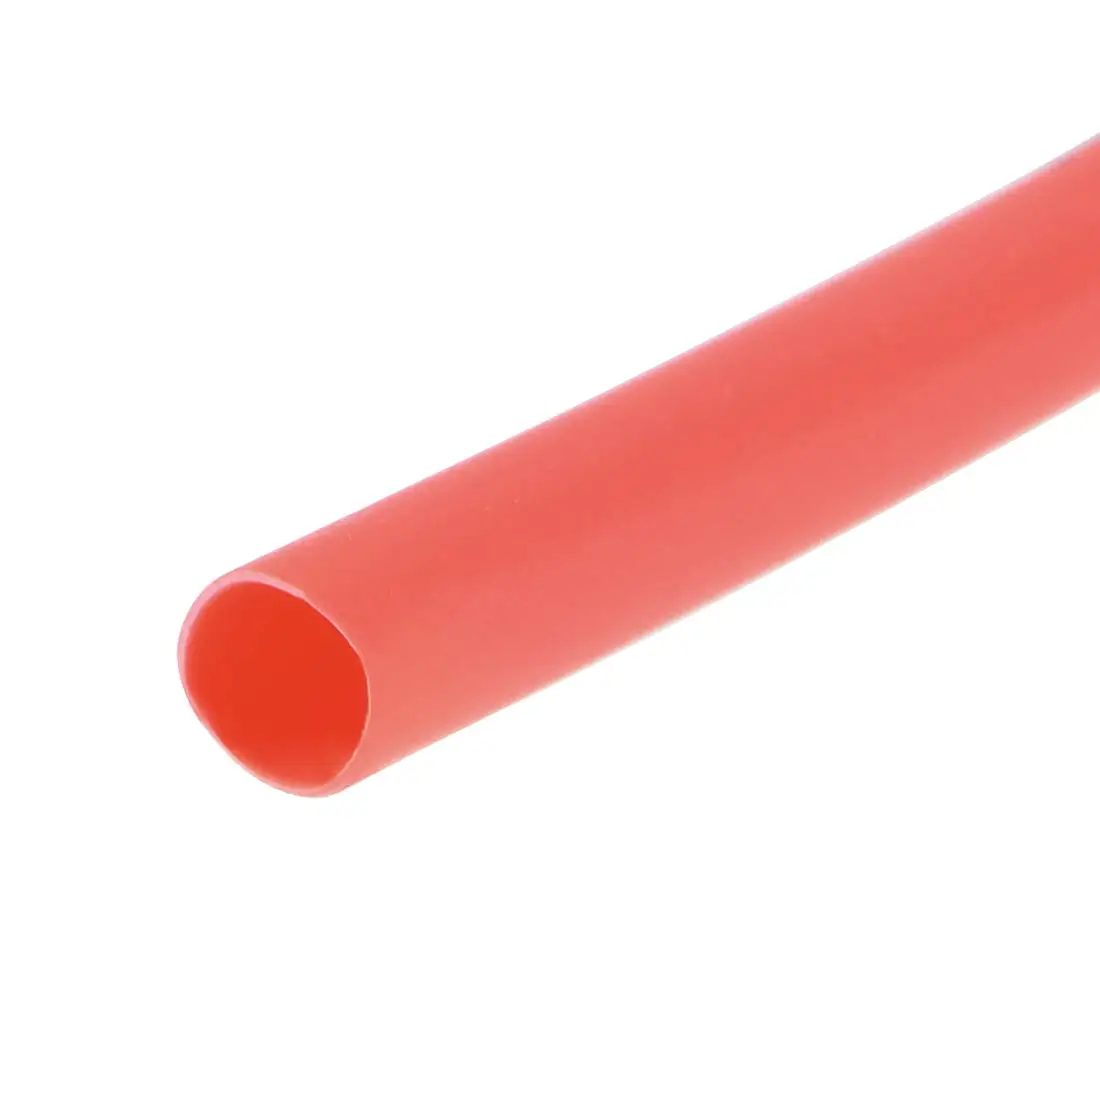 

Keszoox Heat Shrink Tubing, 2mm Dia 4.27mm Flat Width 2:1 Ratio Shrinkable Tube Cable Sleeve 10ft - Black